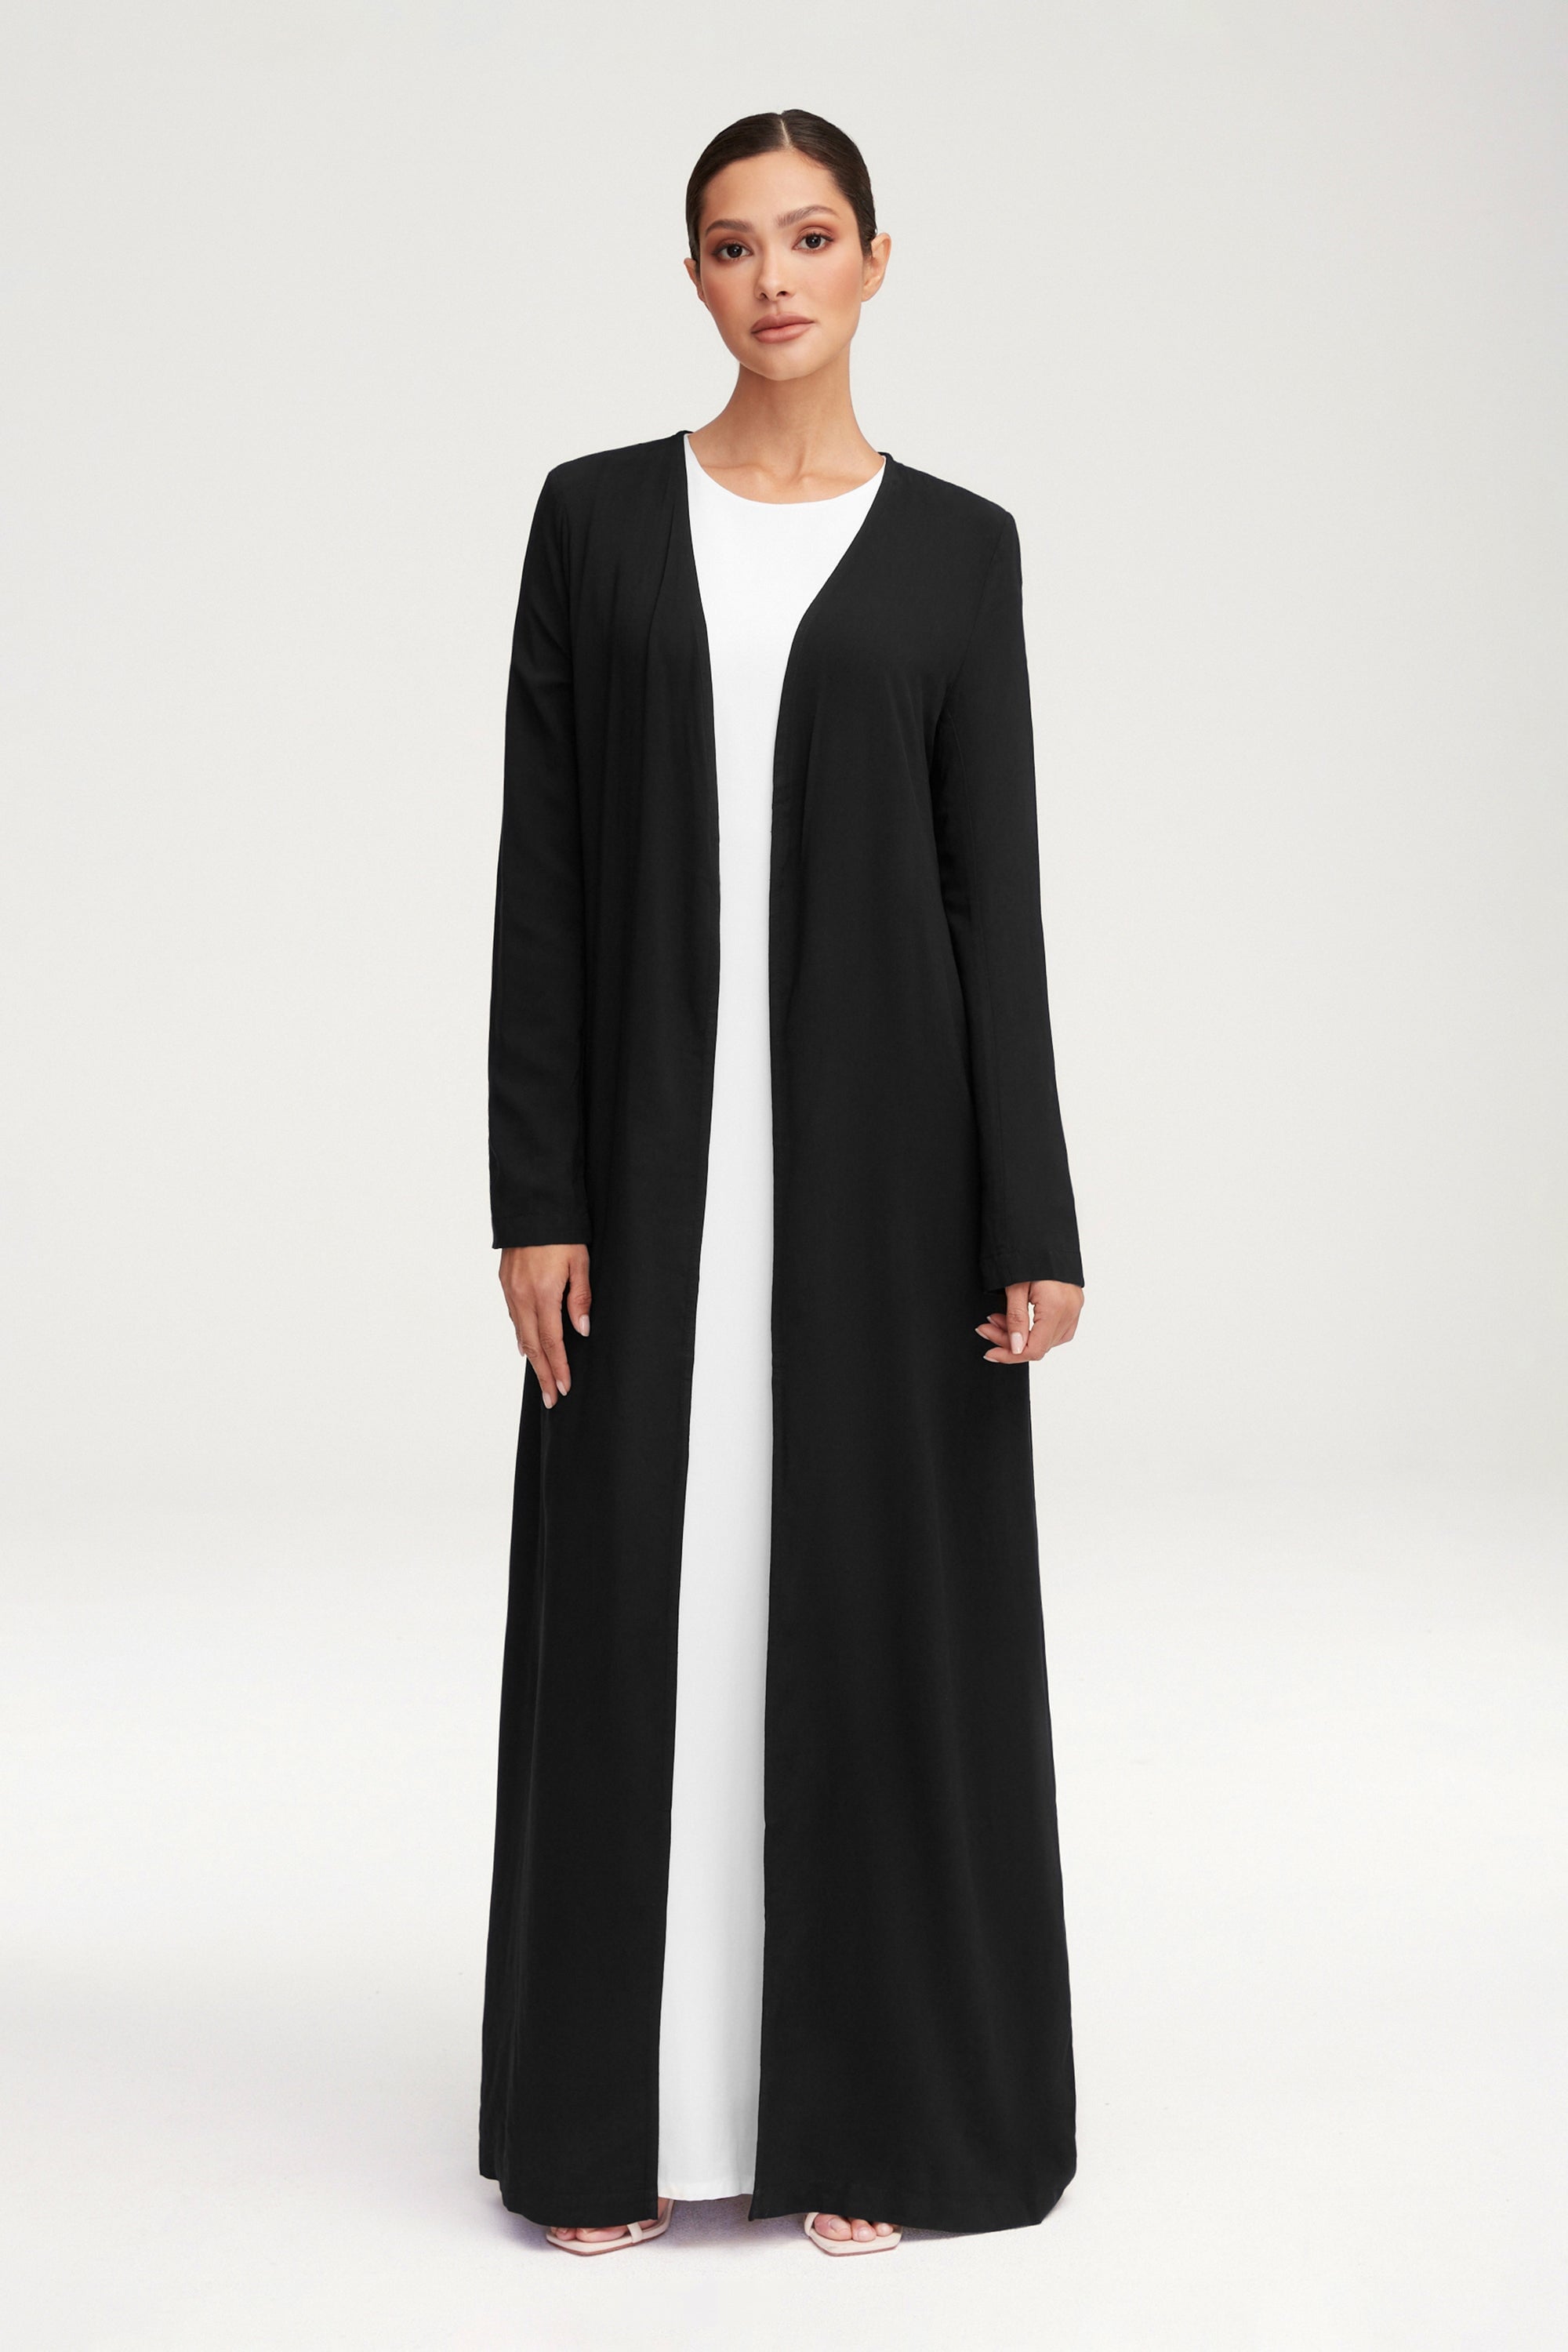 Essential Woven Open Abaya - Black Clothing epschoolboard 